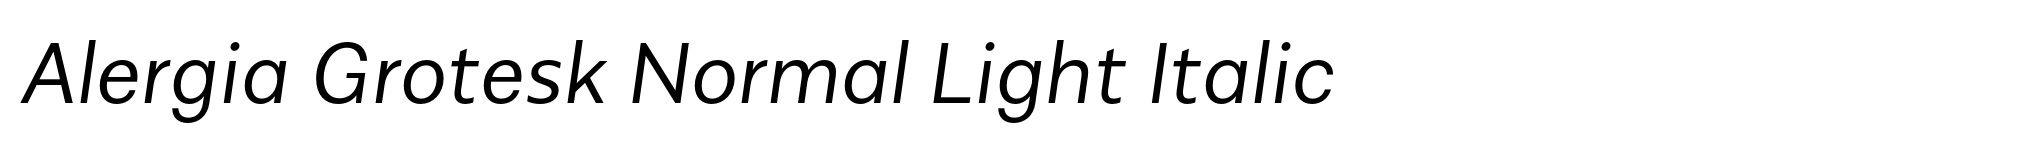 Alergia Grotesk Normal Light Italic image